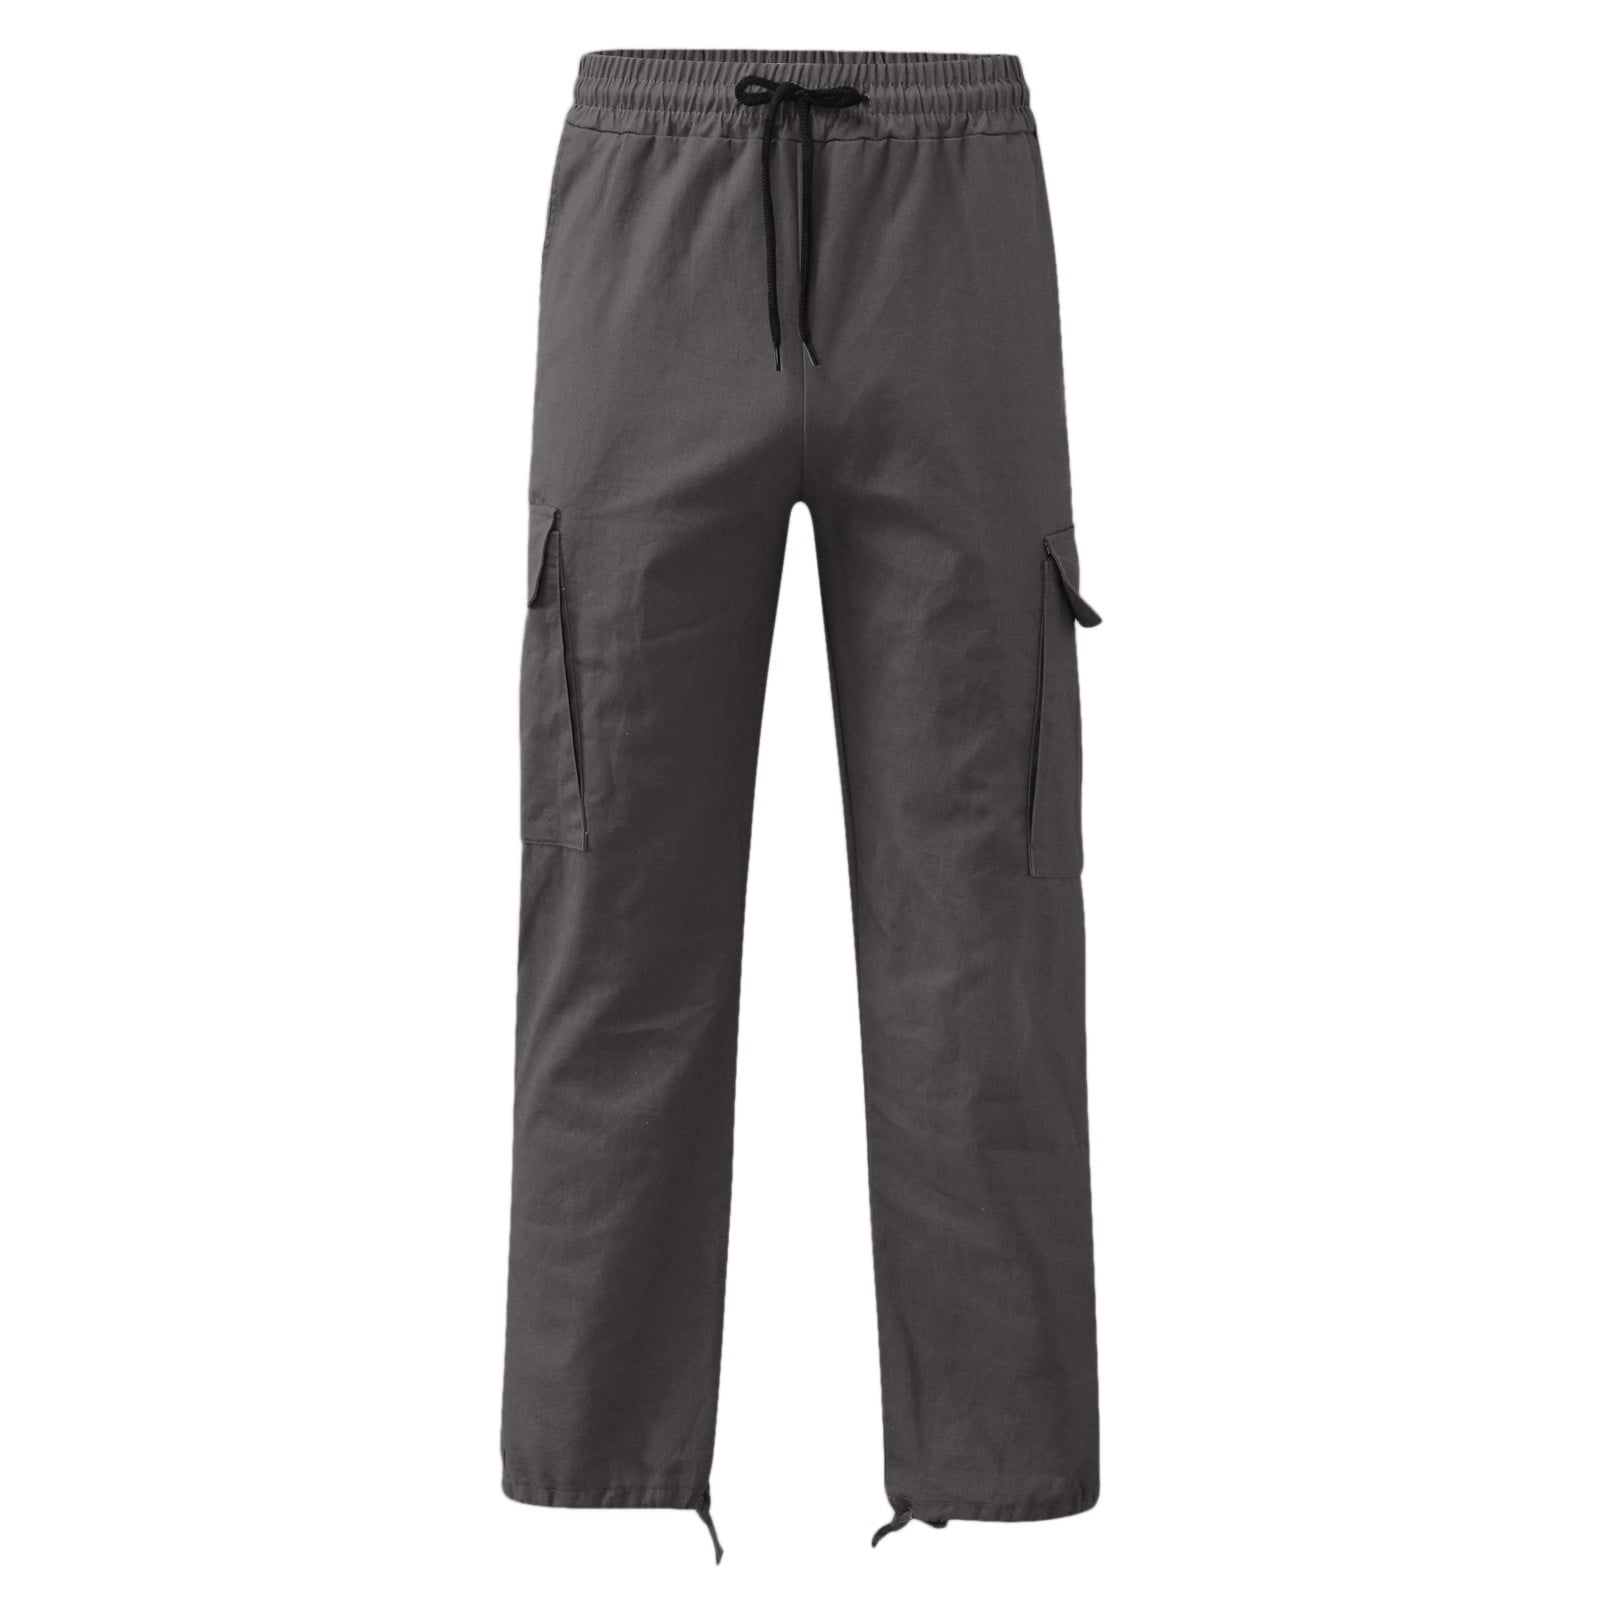 Joower Waterproof Work Pants For Men - Mens Dress Pants Mens Cargo ...